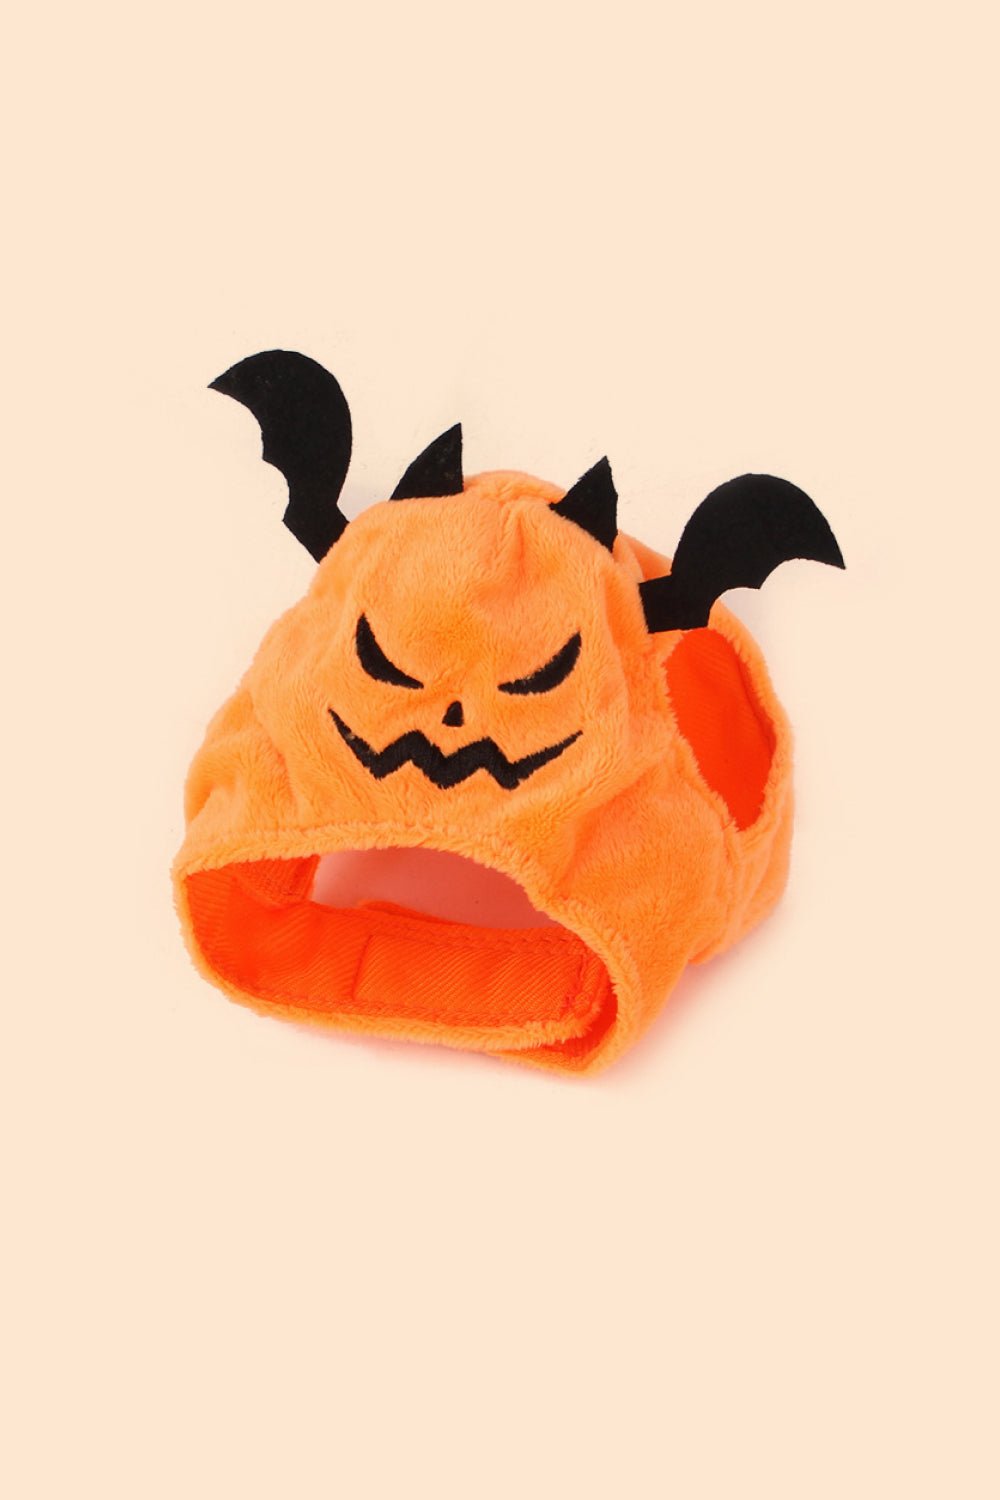 Halloween Pet 2-Pack Jack-O-Lantern with Bat Wings Costume Hat Set